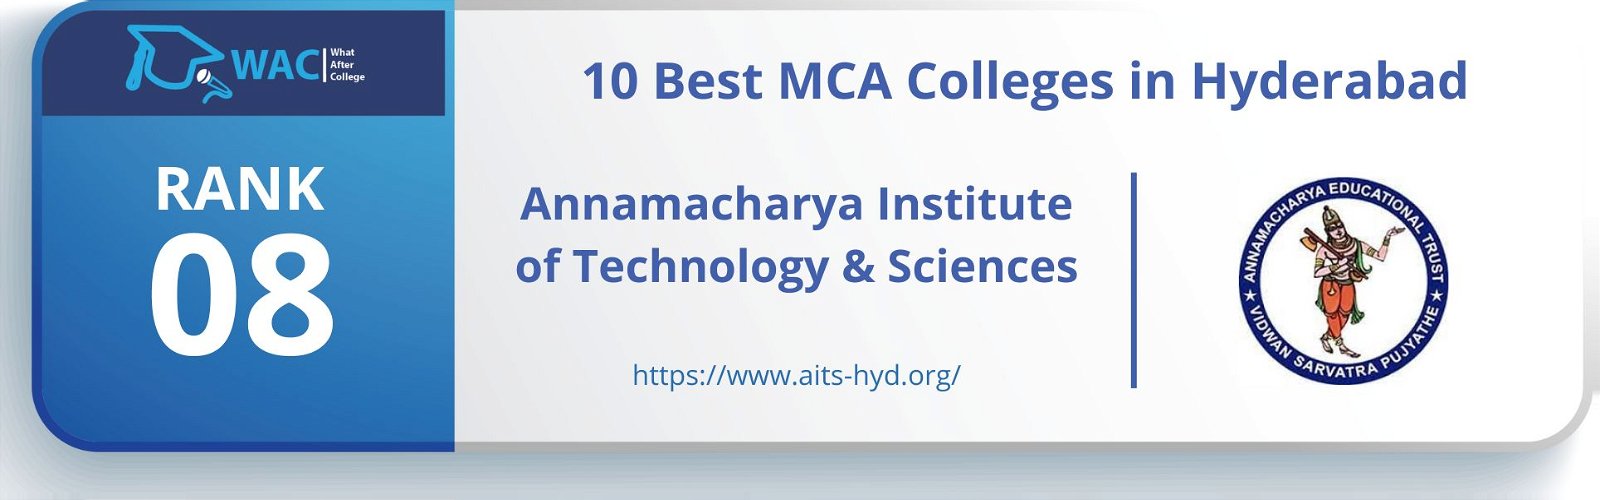 best mca colleges in hyderabad